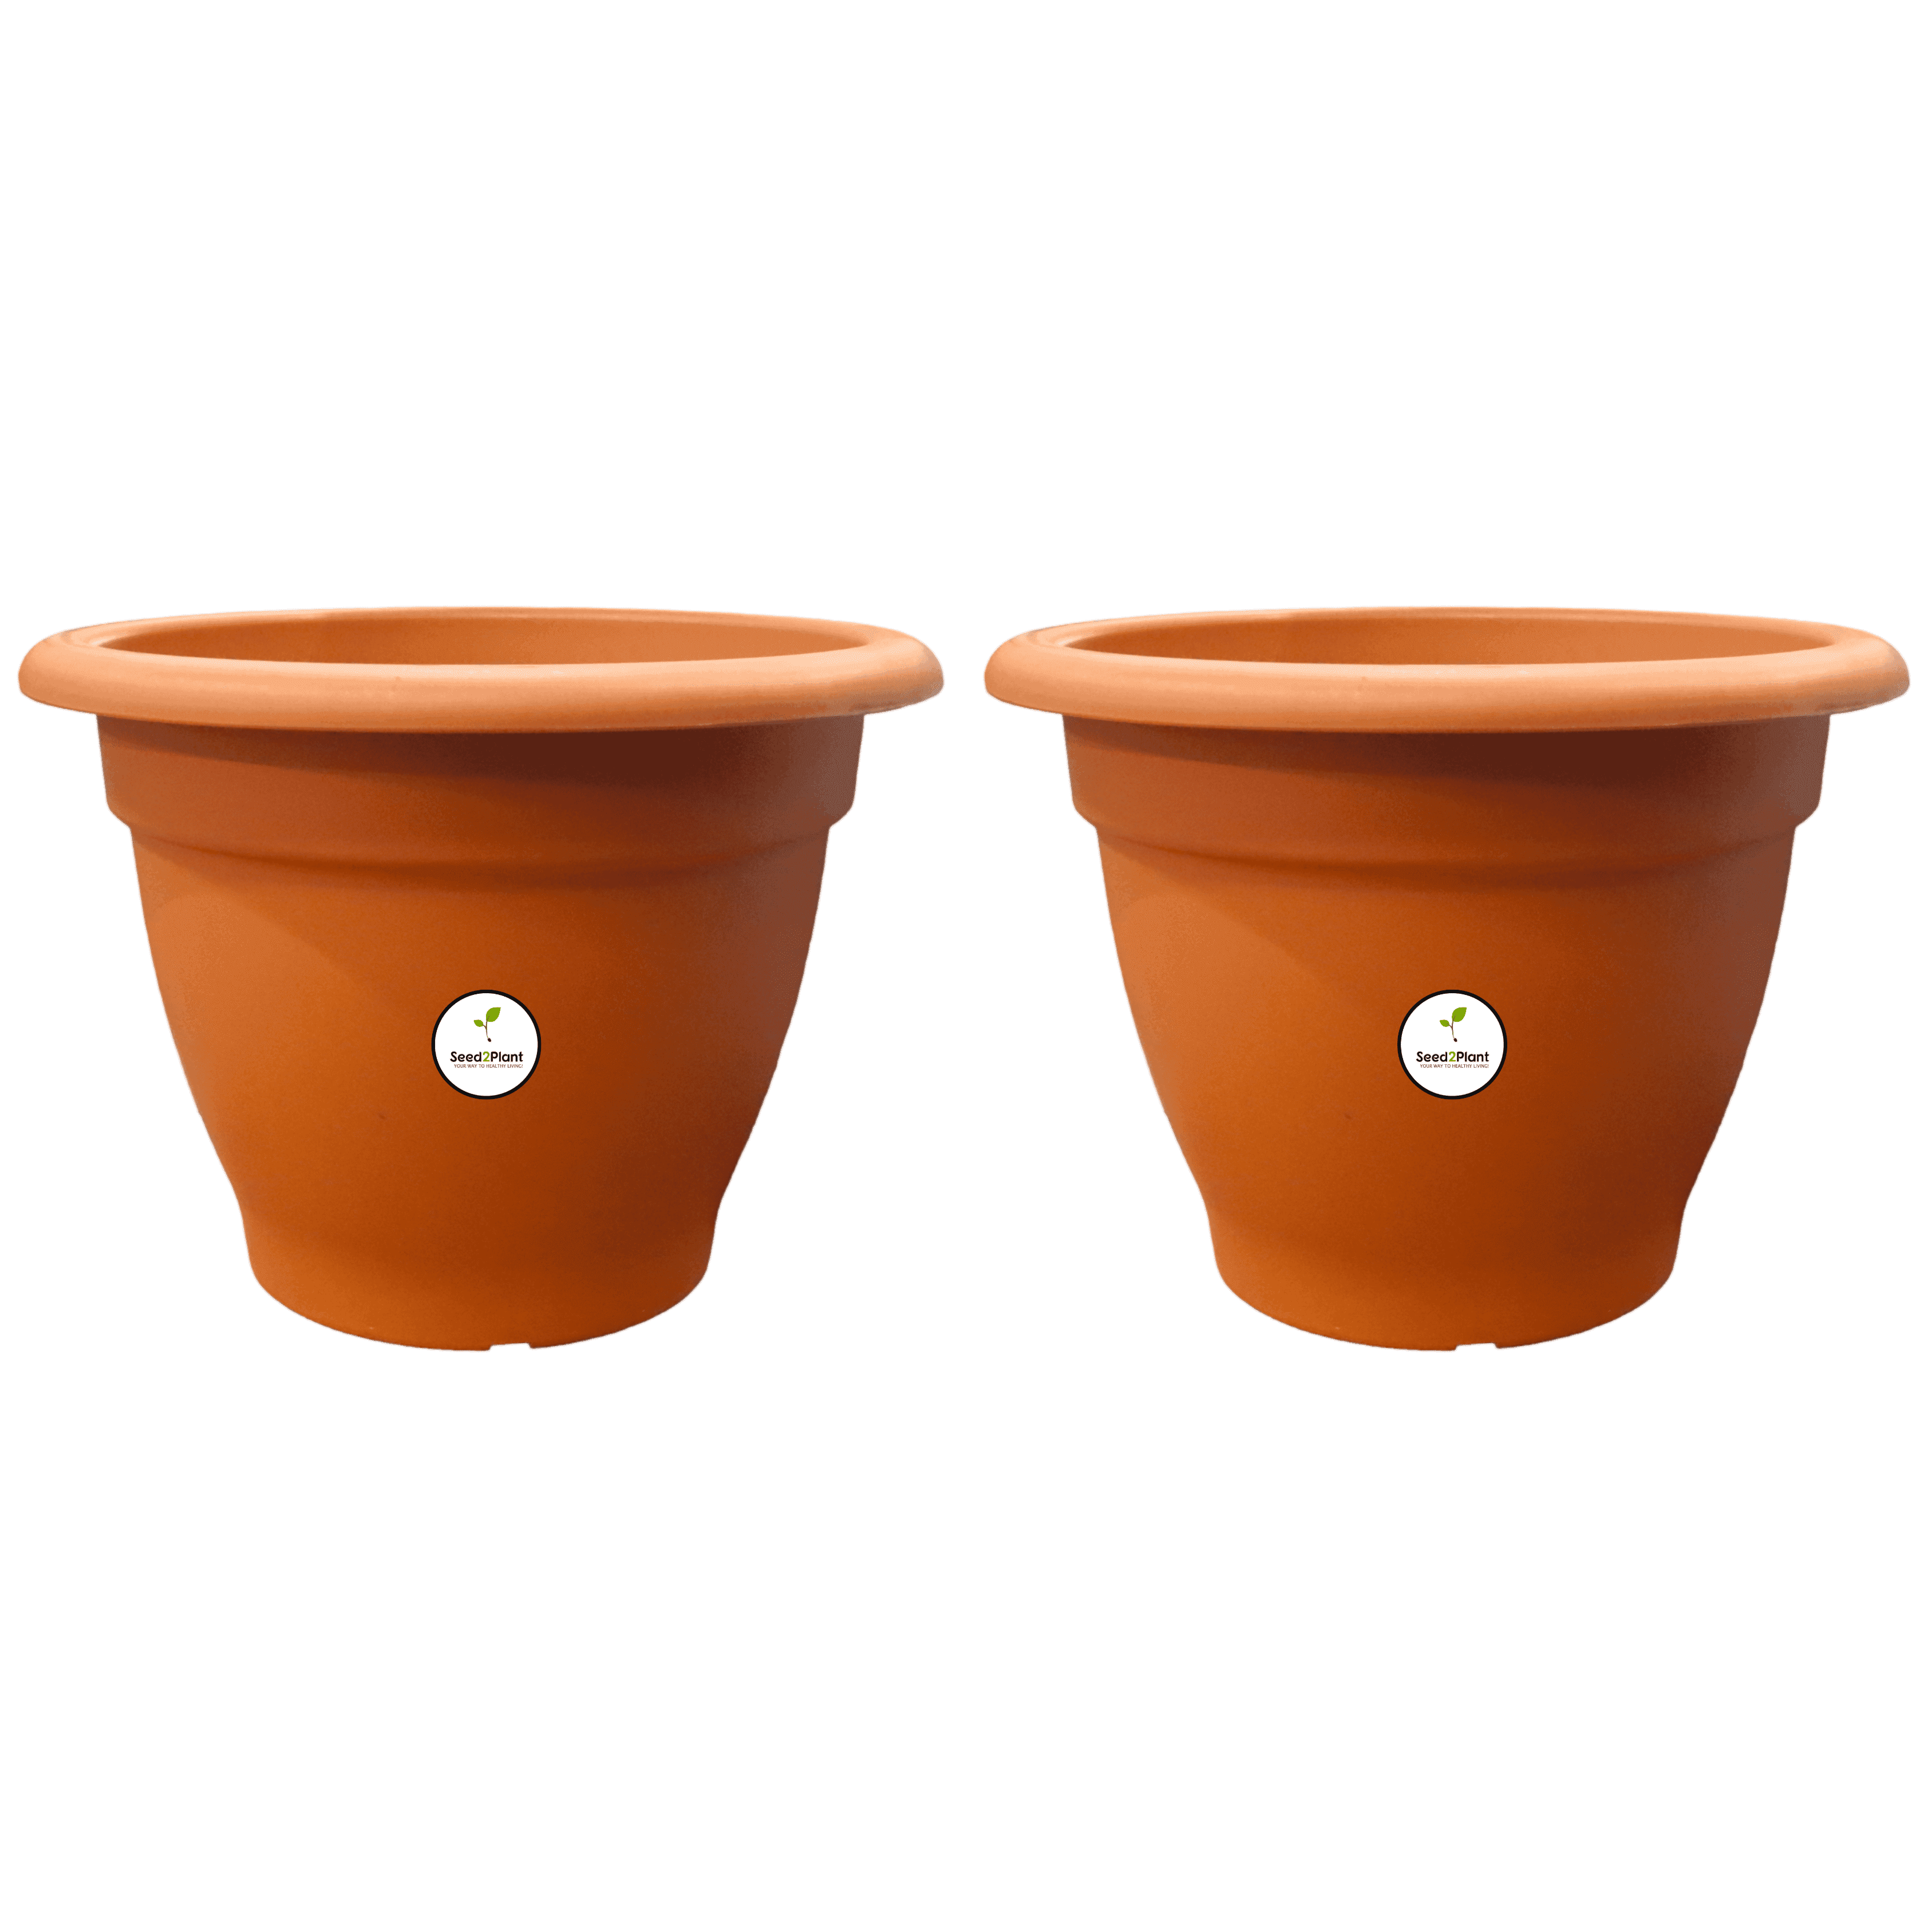 25 Inch Plastic Pots UV Treated - Terracotta Colour